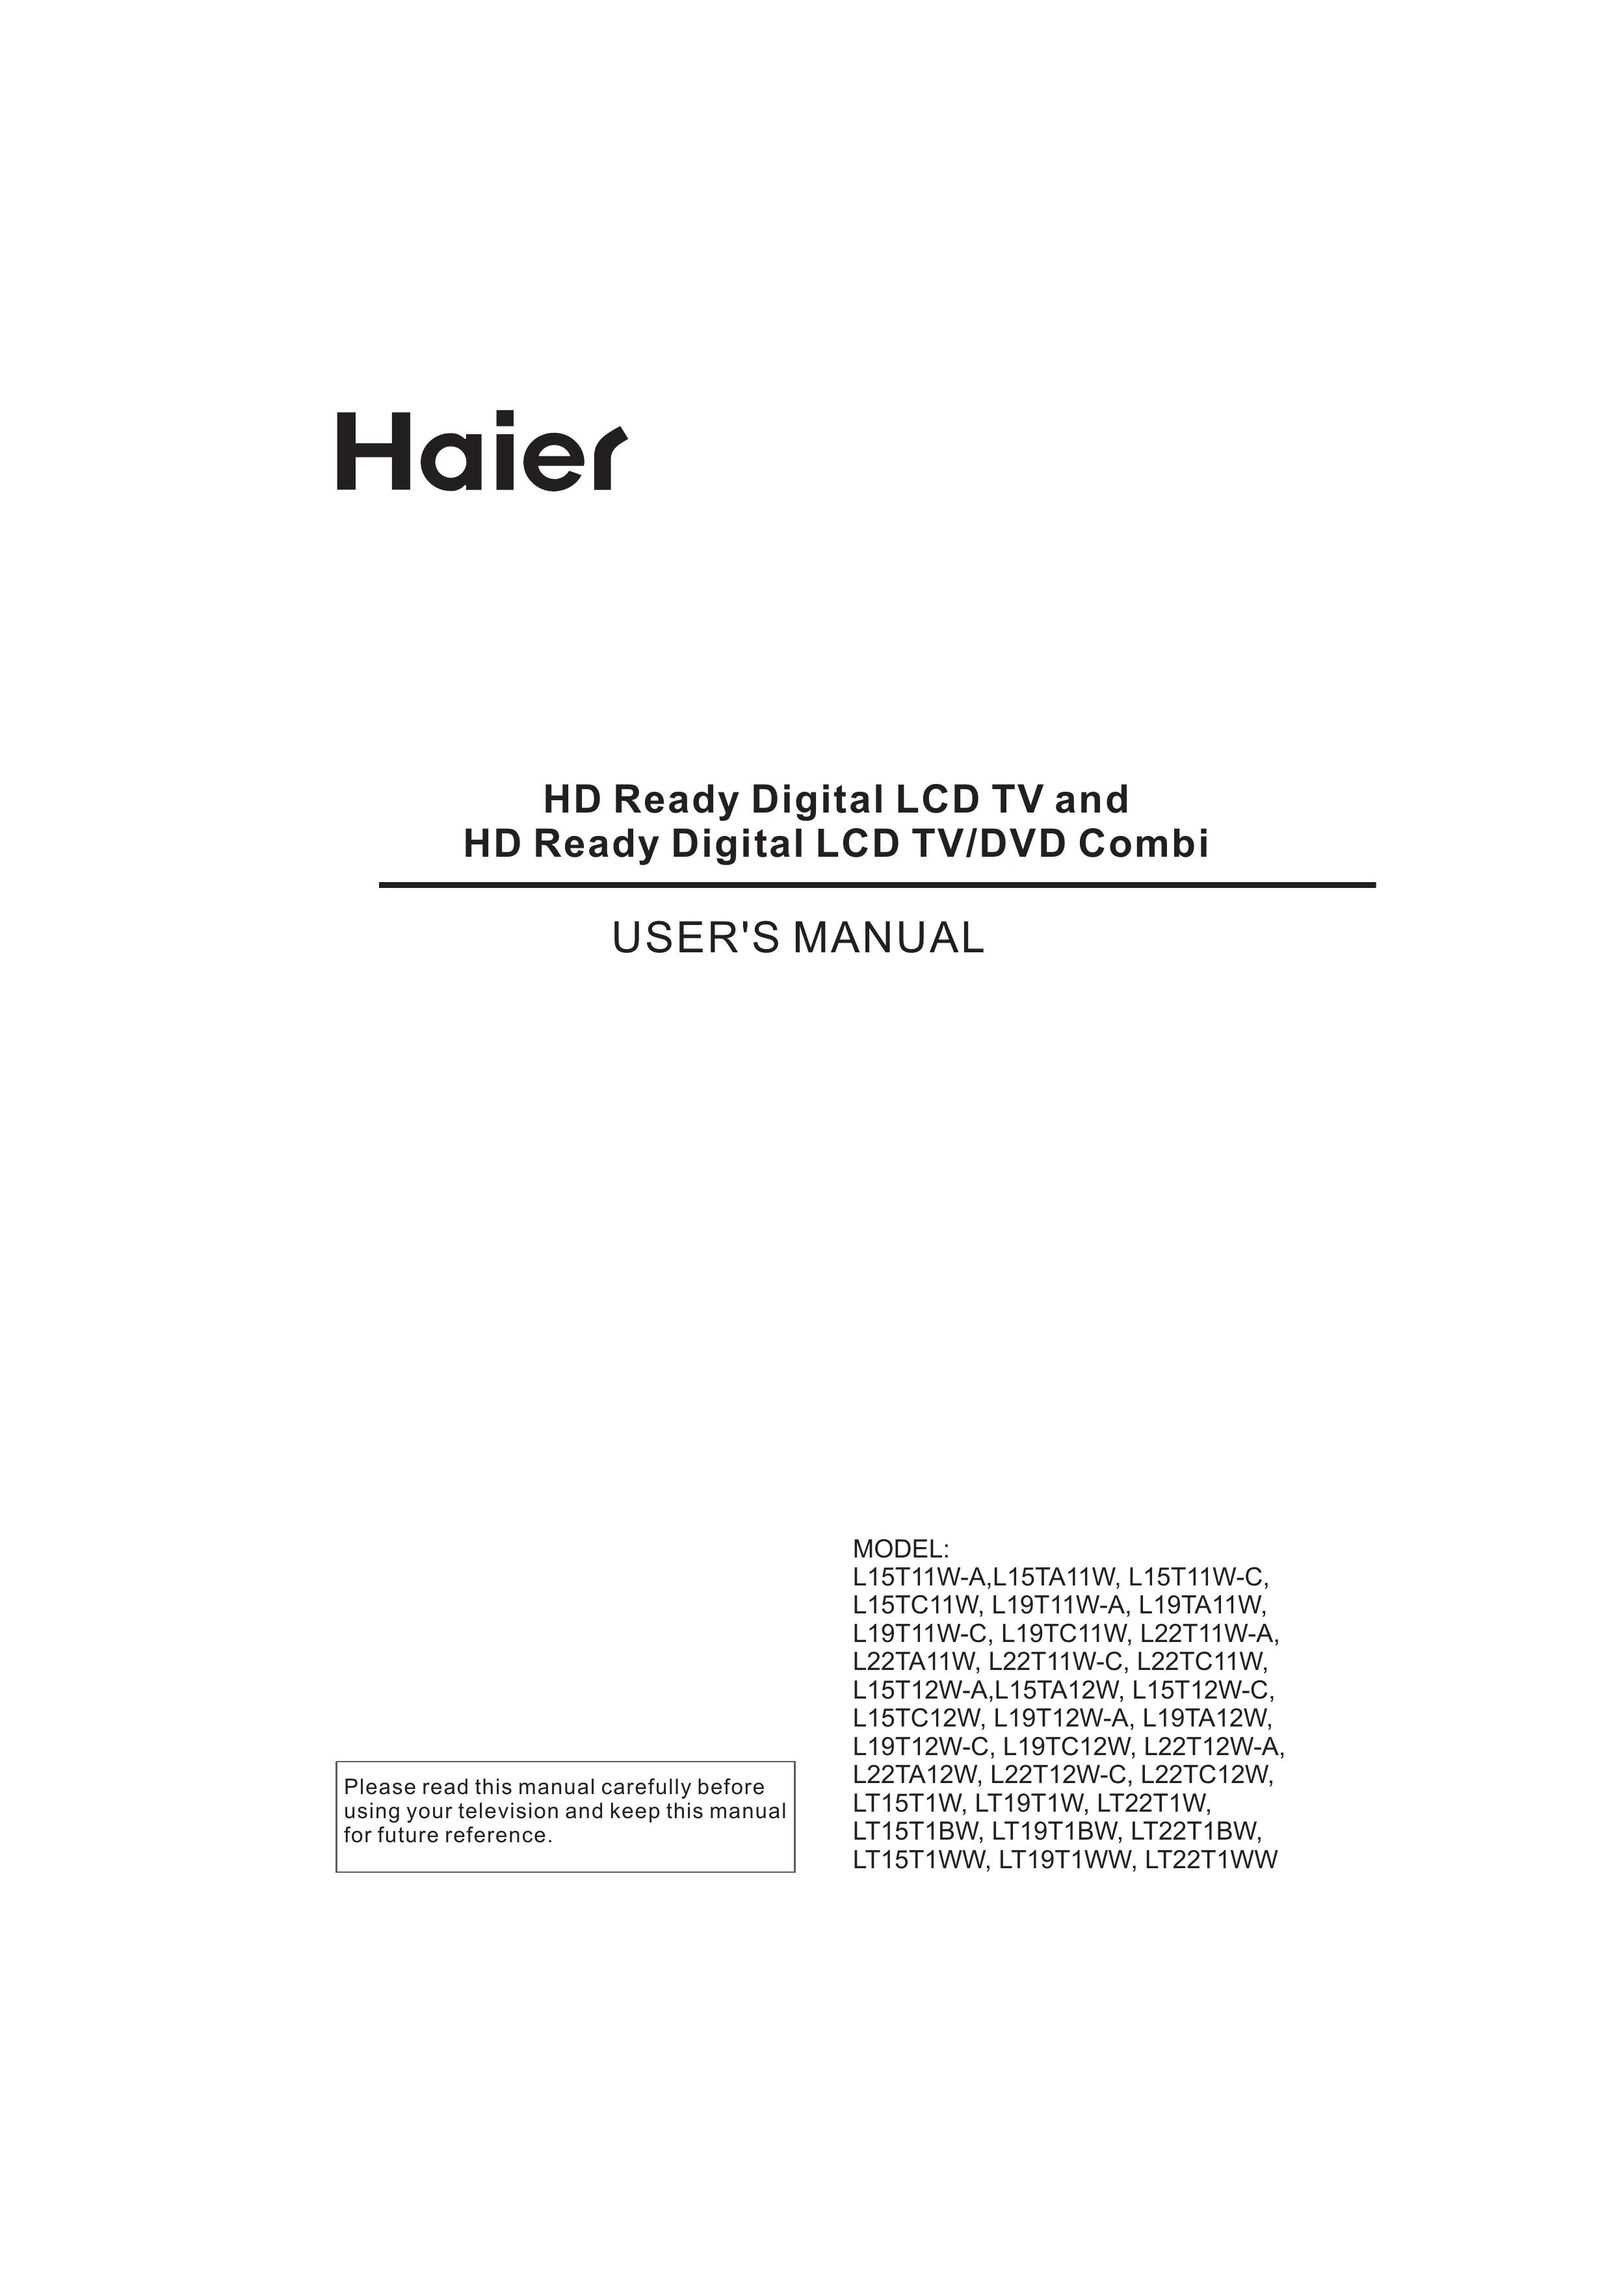 Haier L22T11W-A TV DVD Combo User Manual